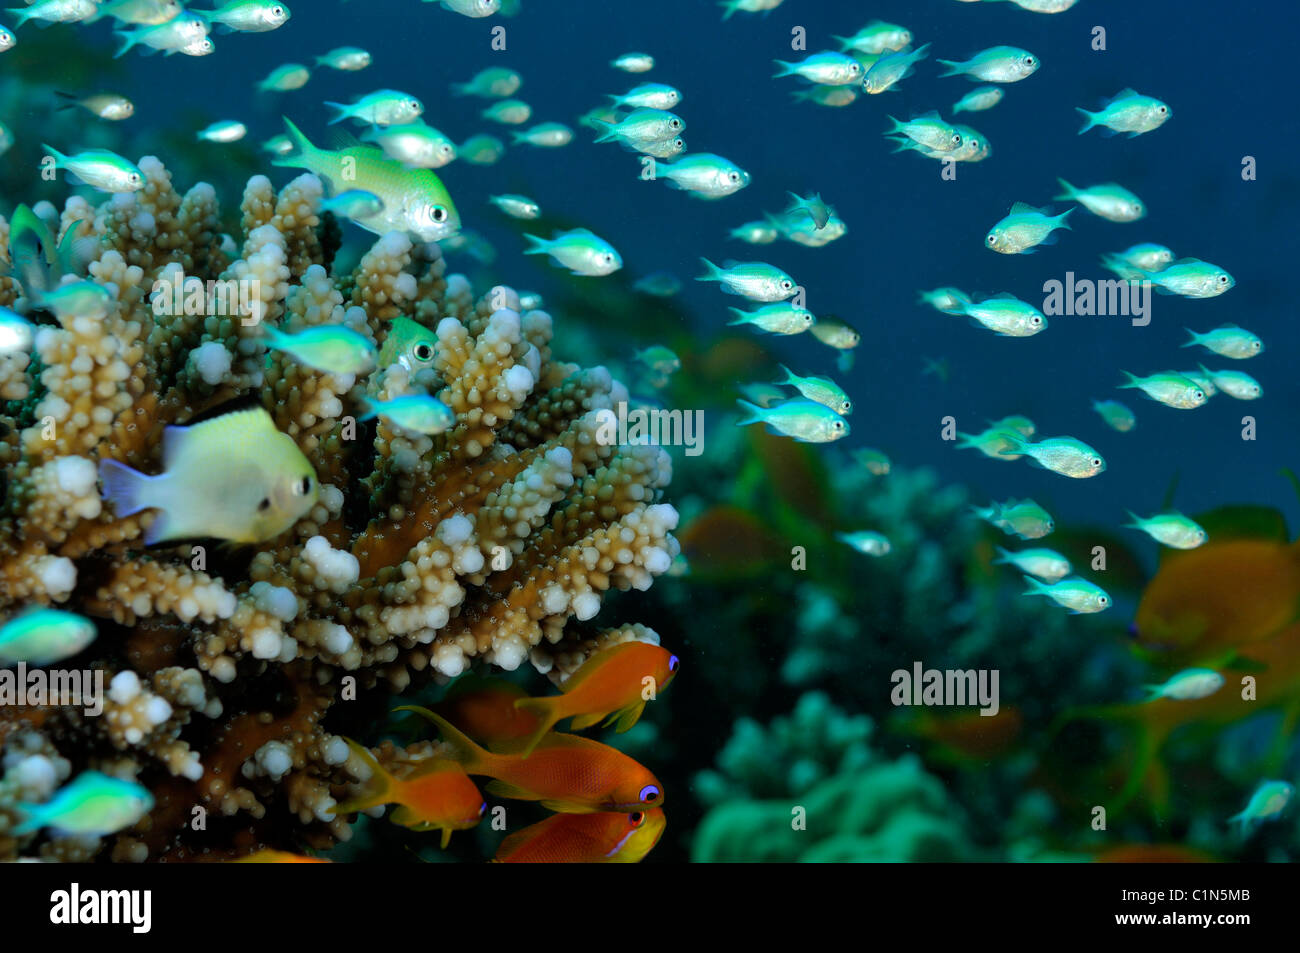 Bluegreen chromis fish, Chromis viridis, aggregation on Acropora lamarcki coral Stock Photo